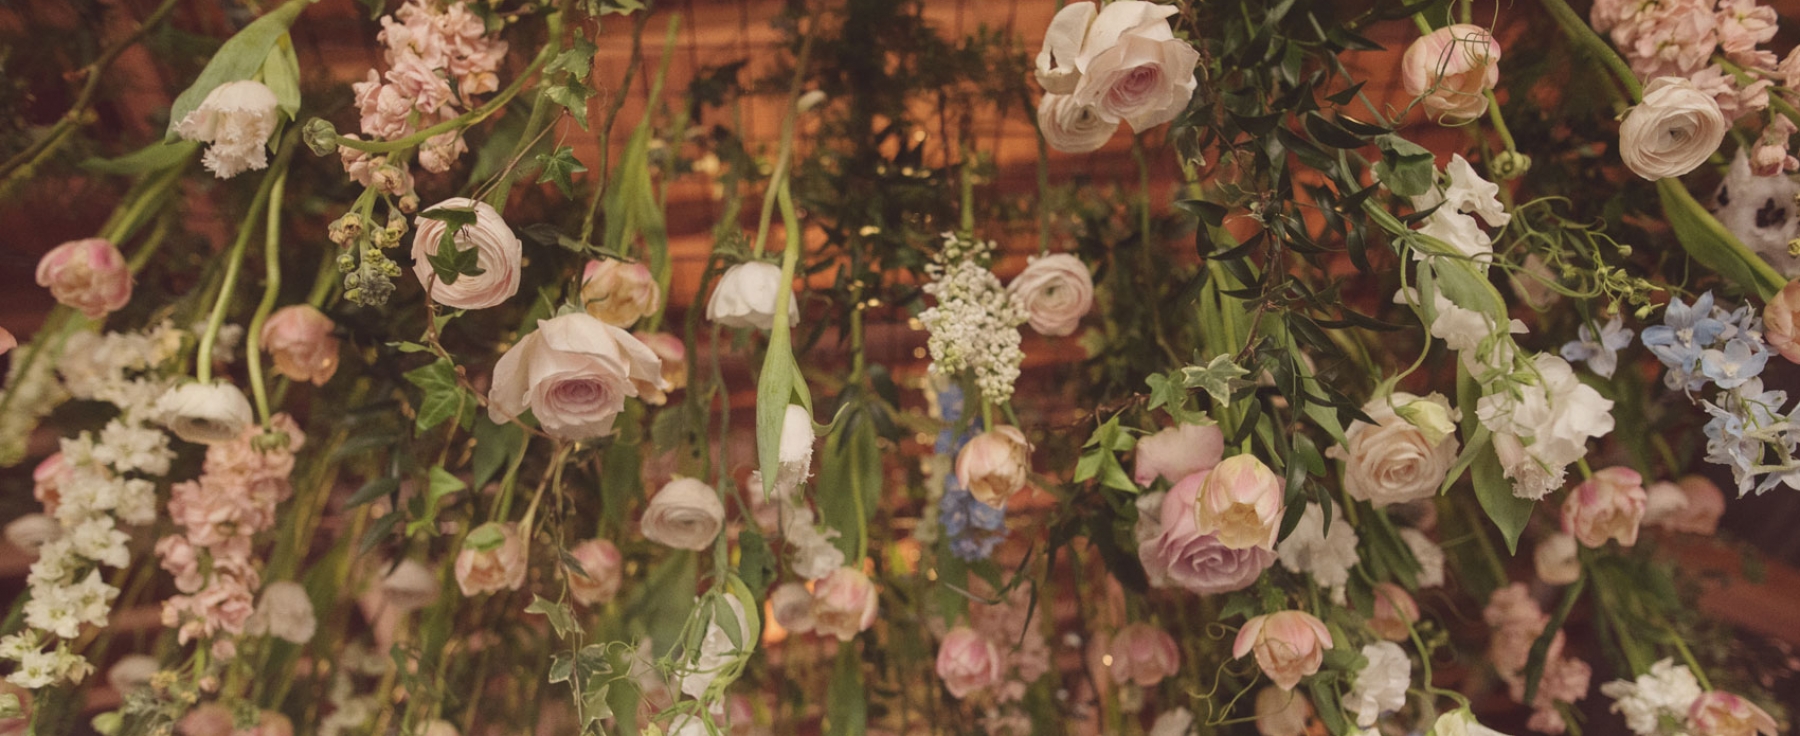 joanne-truby-wedding-florals-slide-4